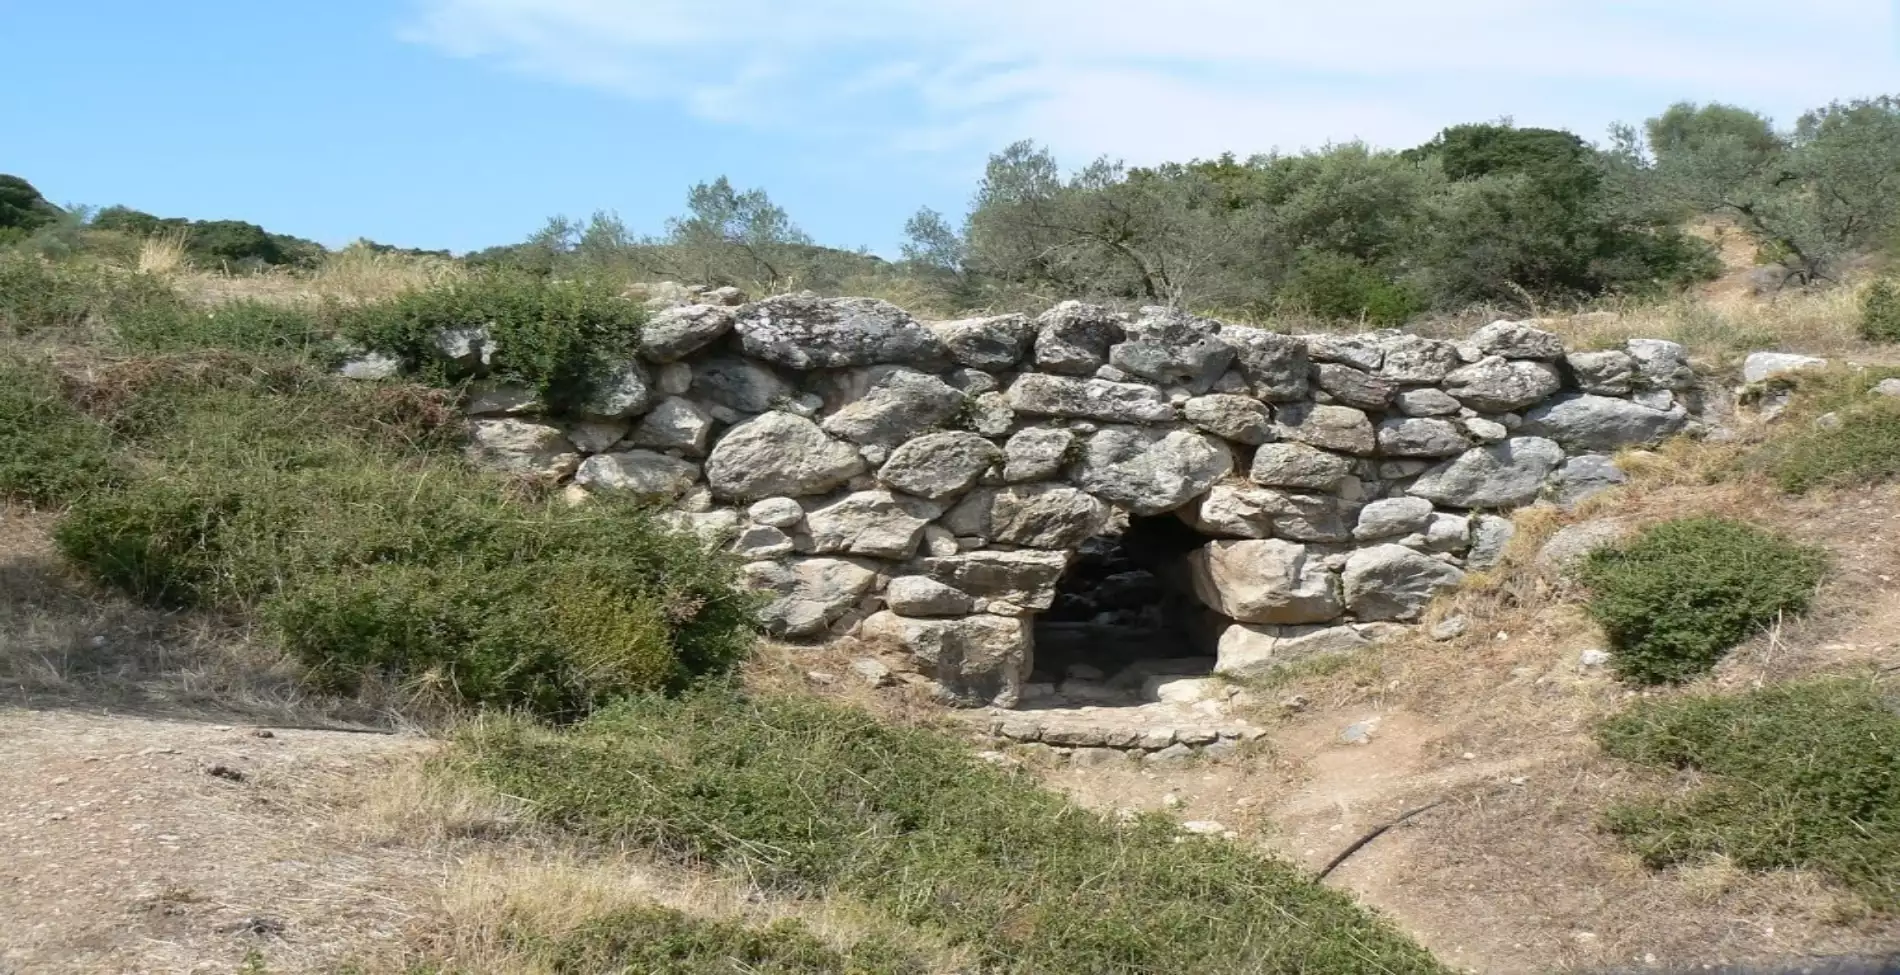 Europe's oldest preserved bridge is in Greece